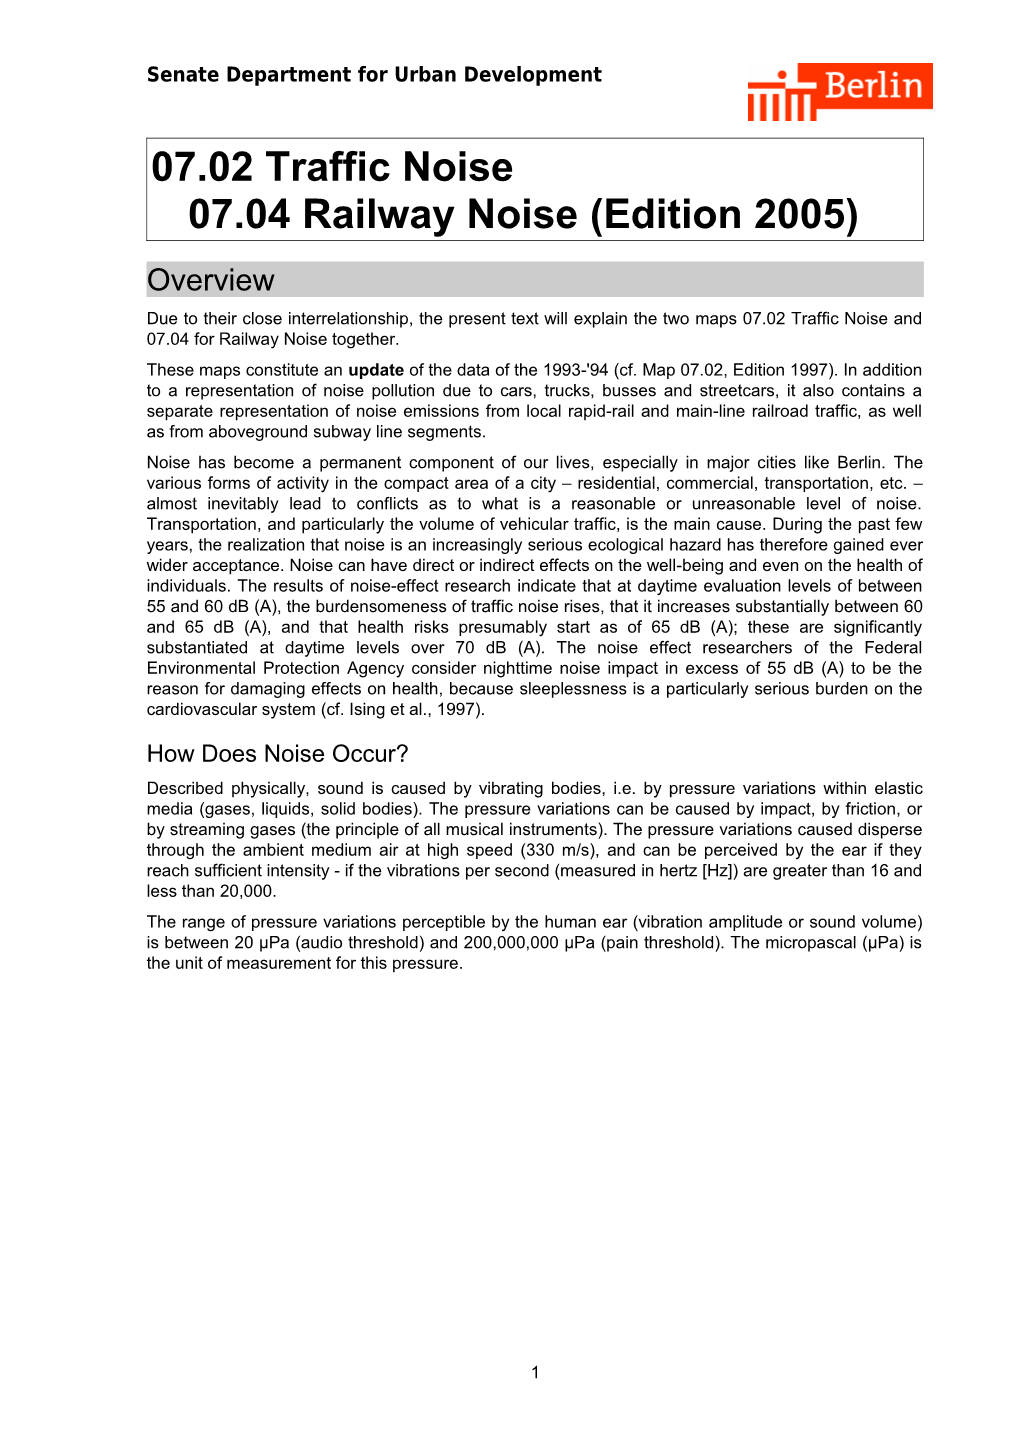 07.02 Traffic Noise / 07.04 Railway Noise (Edition 2005)